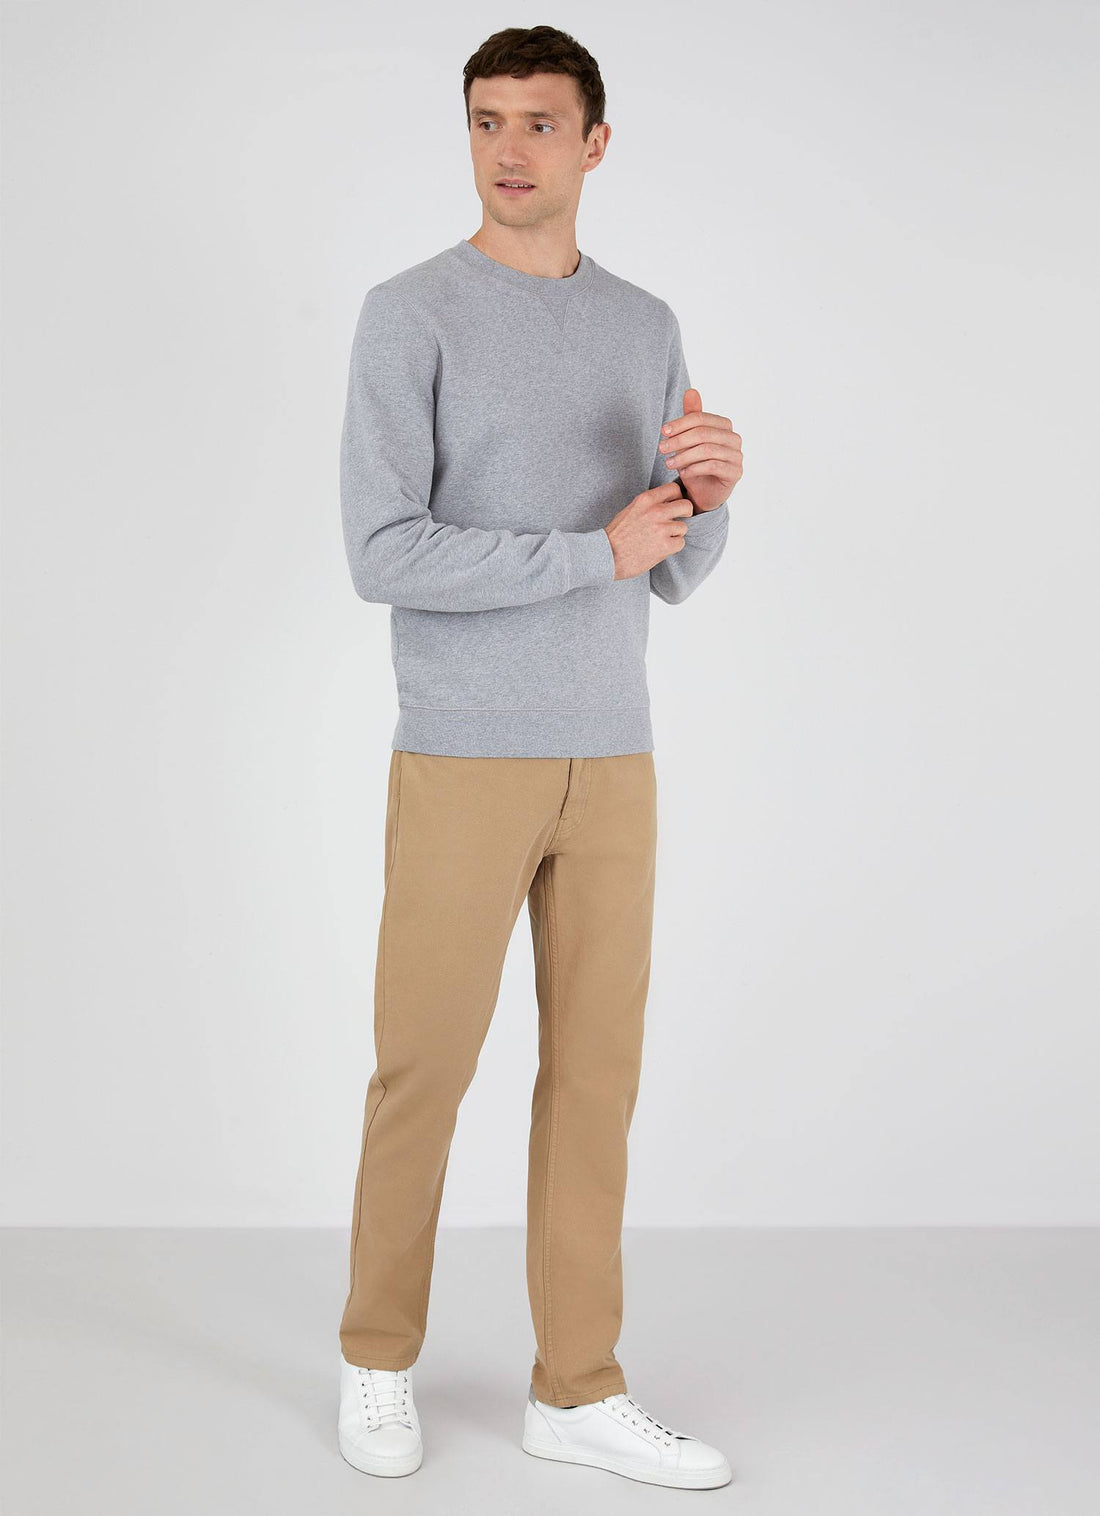 Men's Cotton Drill 5 Pocket Trouser in Stone